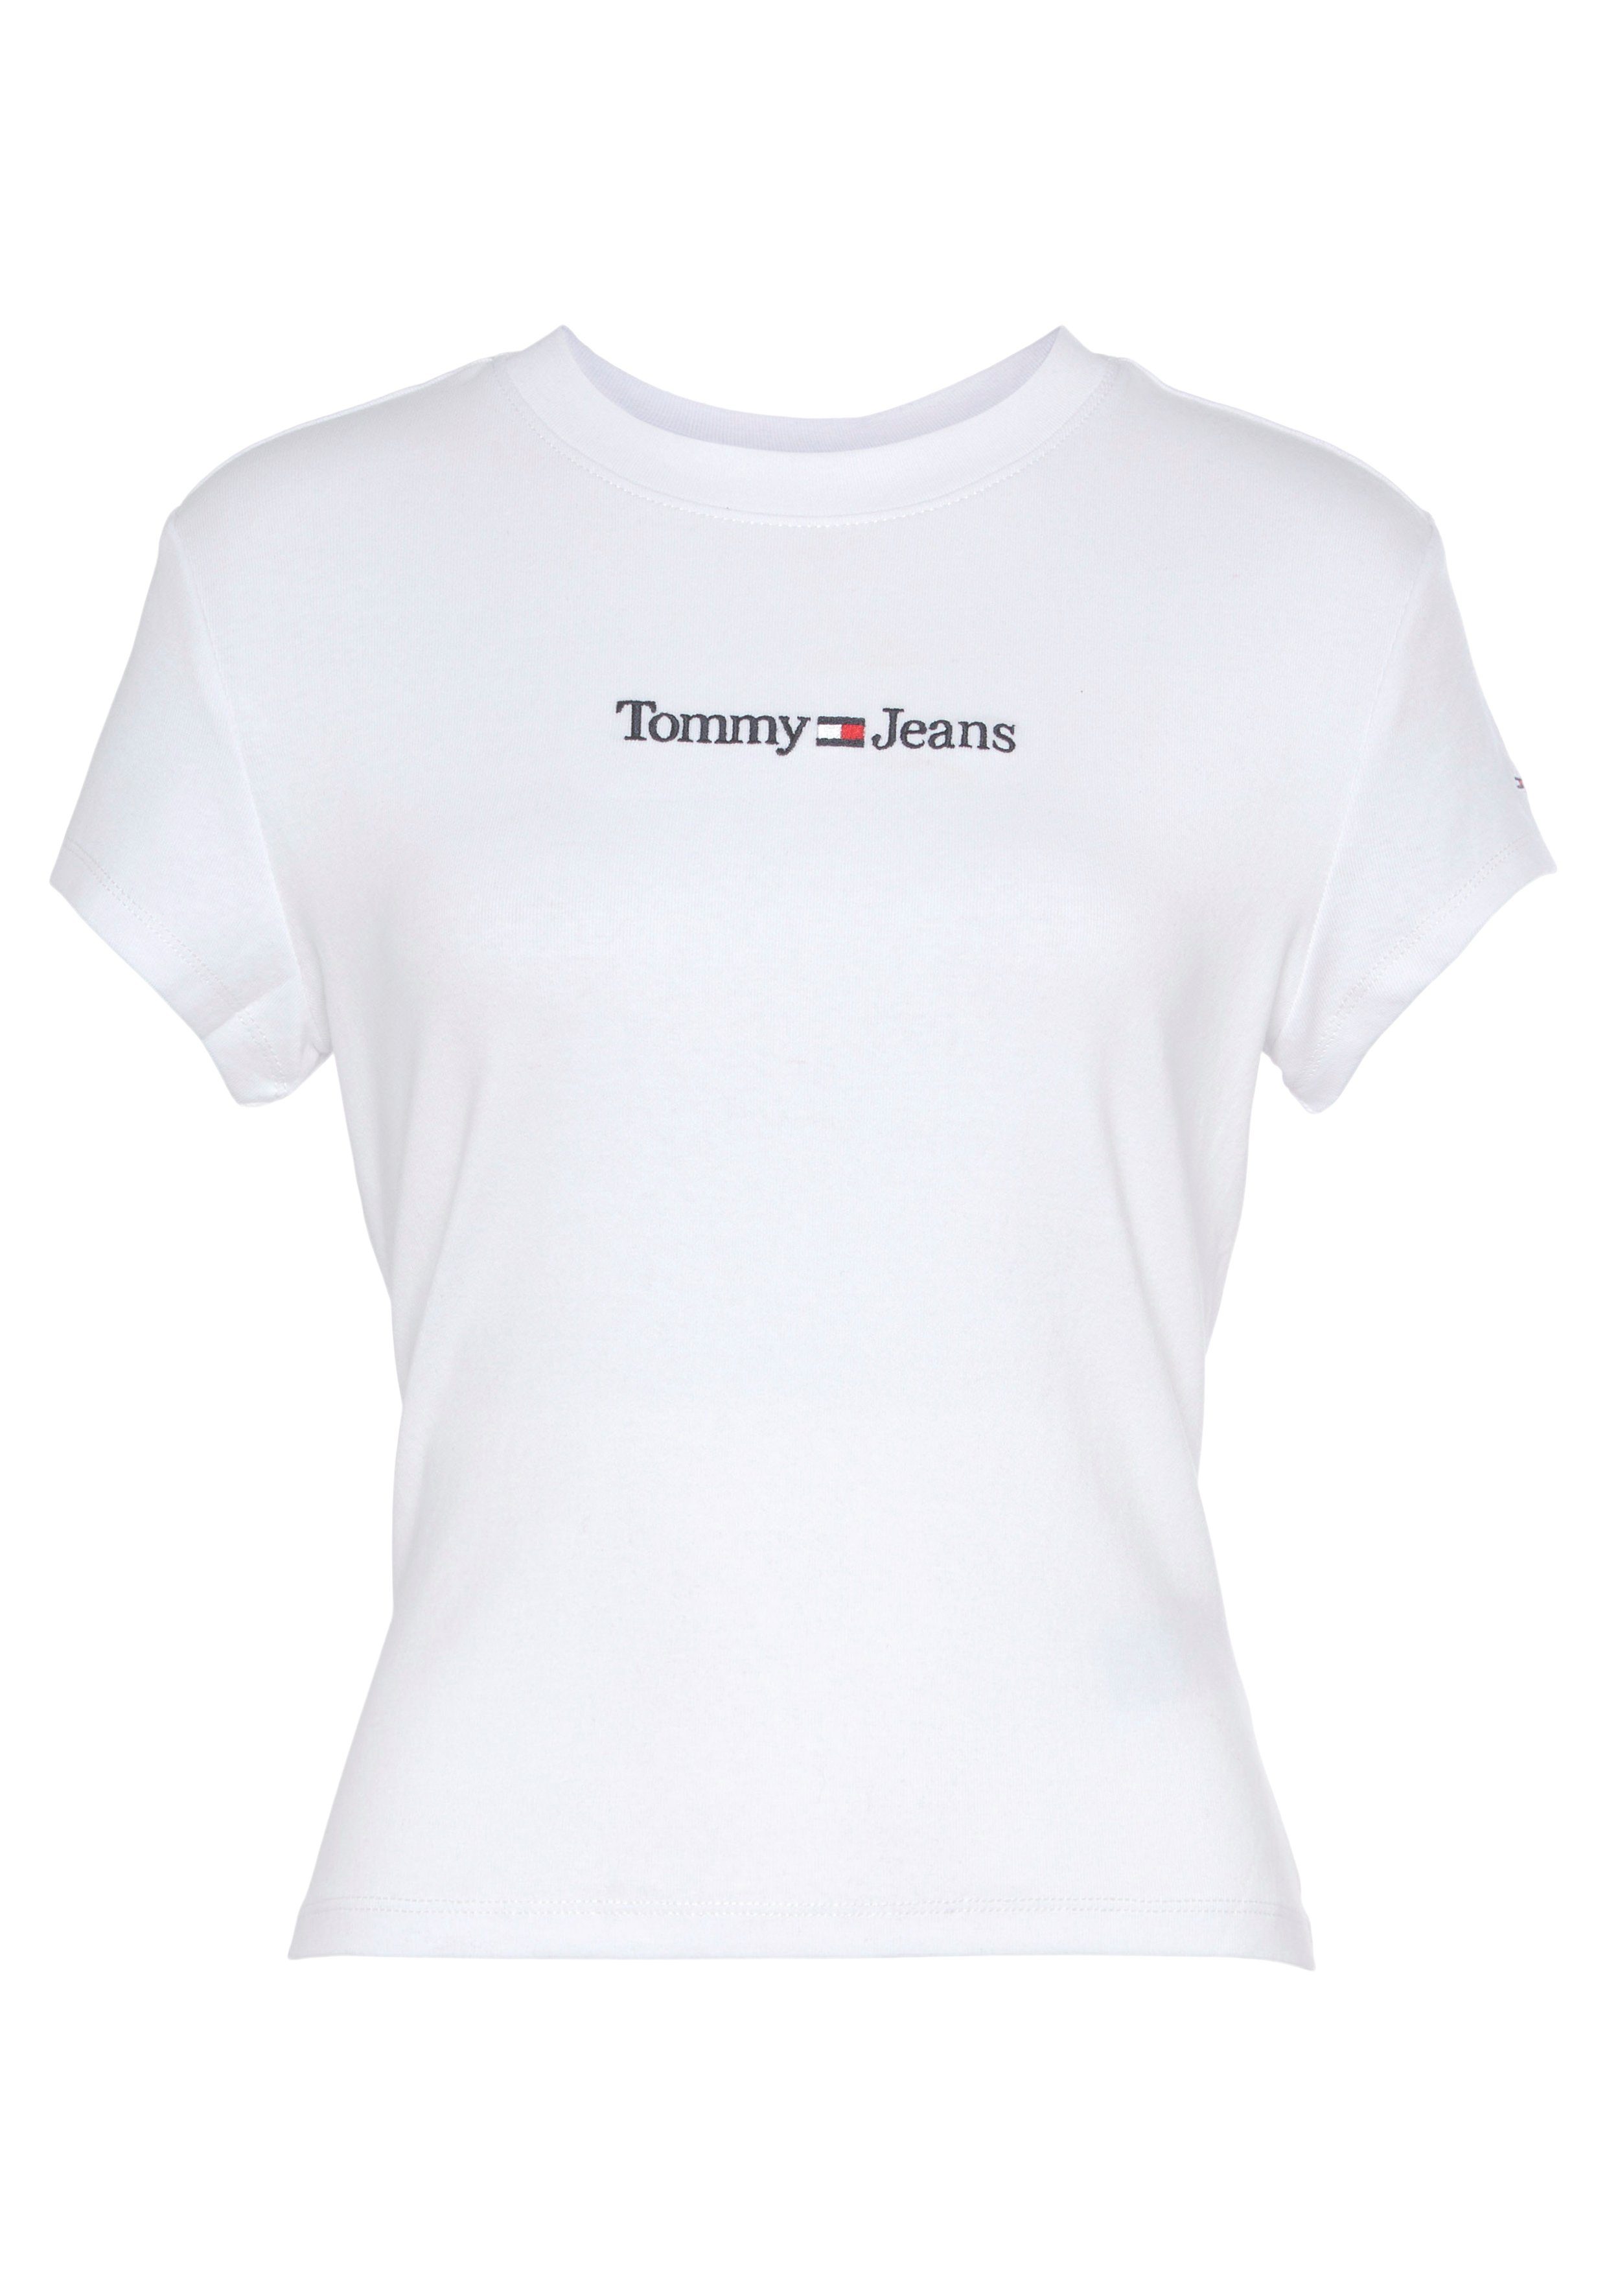 Tommy Jeans Kurzarmshirt Jeans TJW SS dezenten Stickereien mit BABY White SERIF LINEAR Tommy